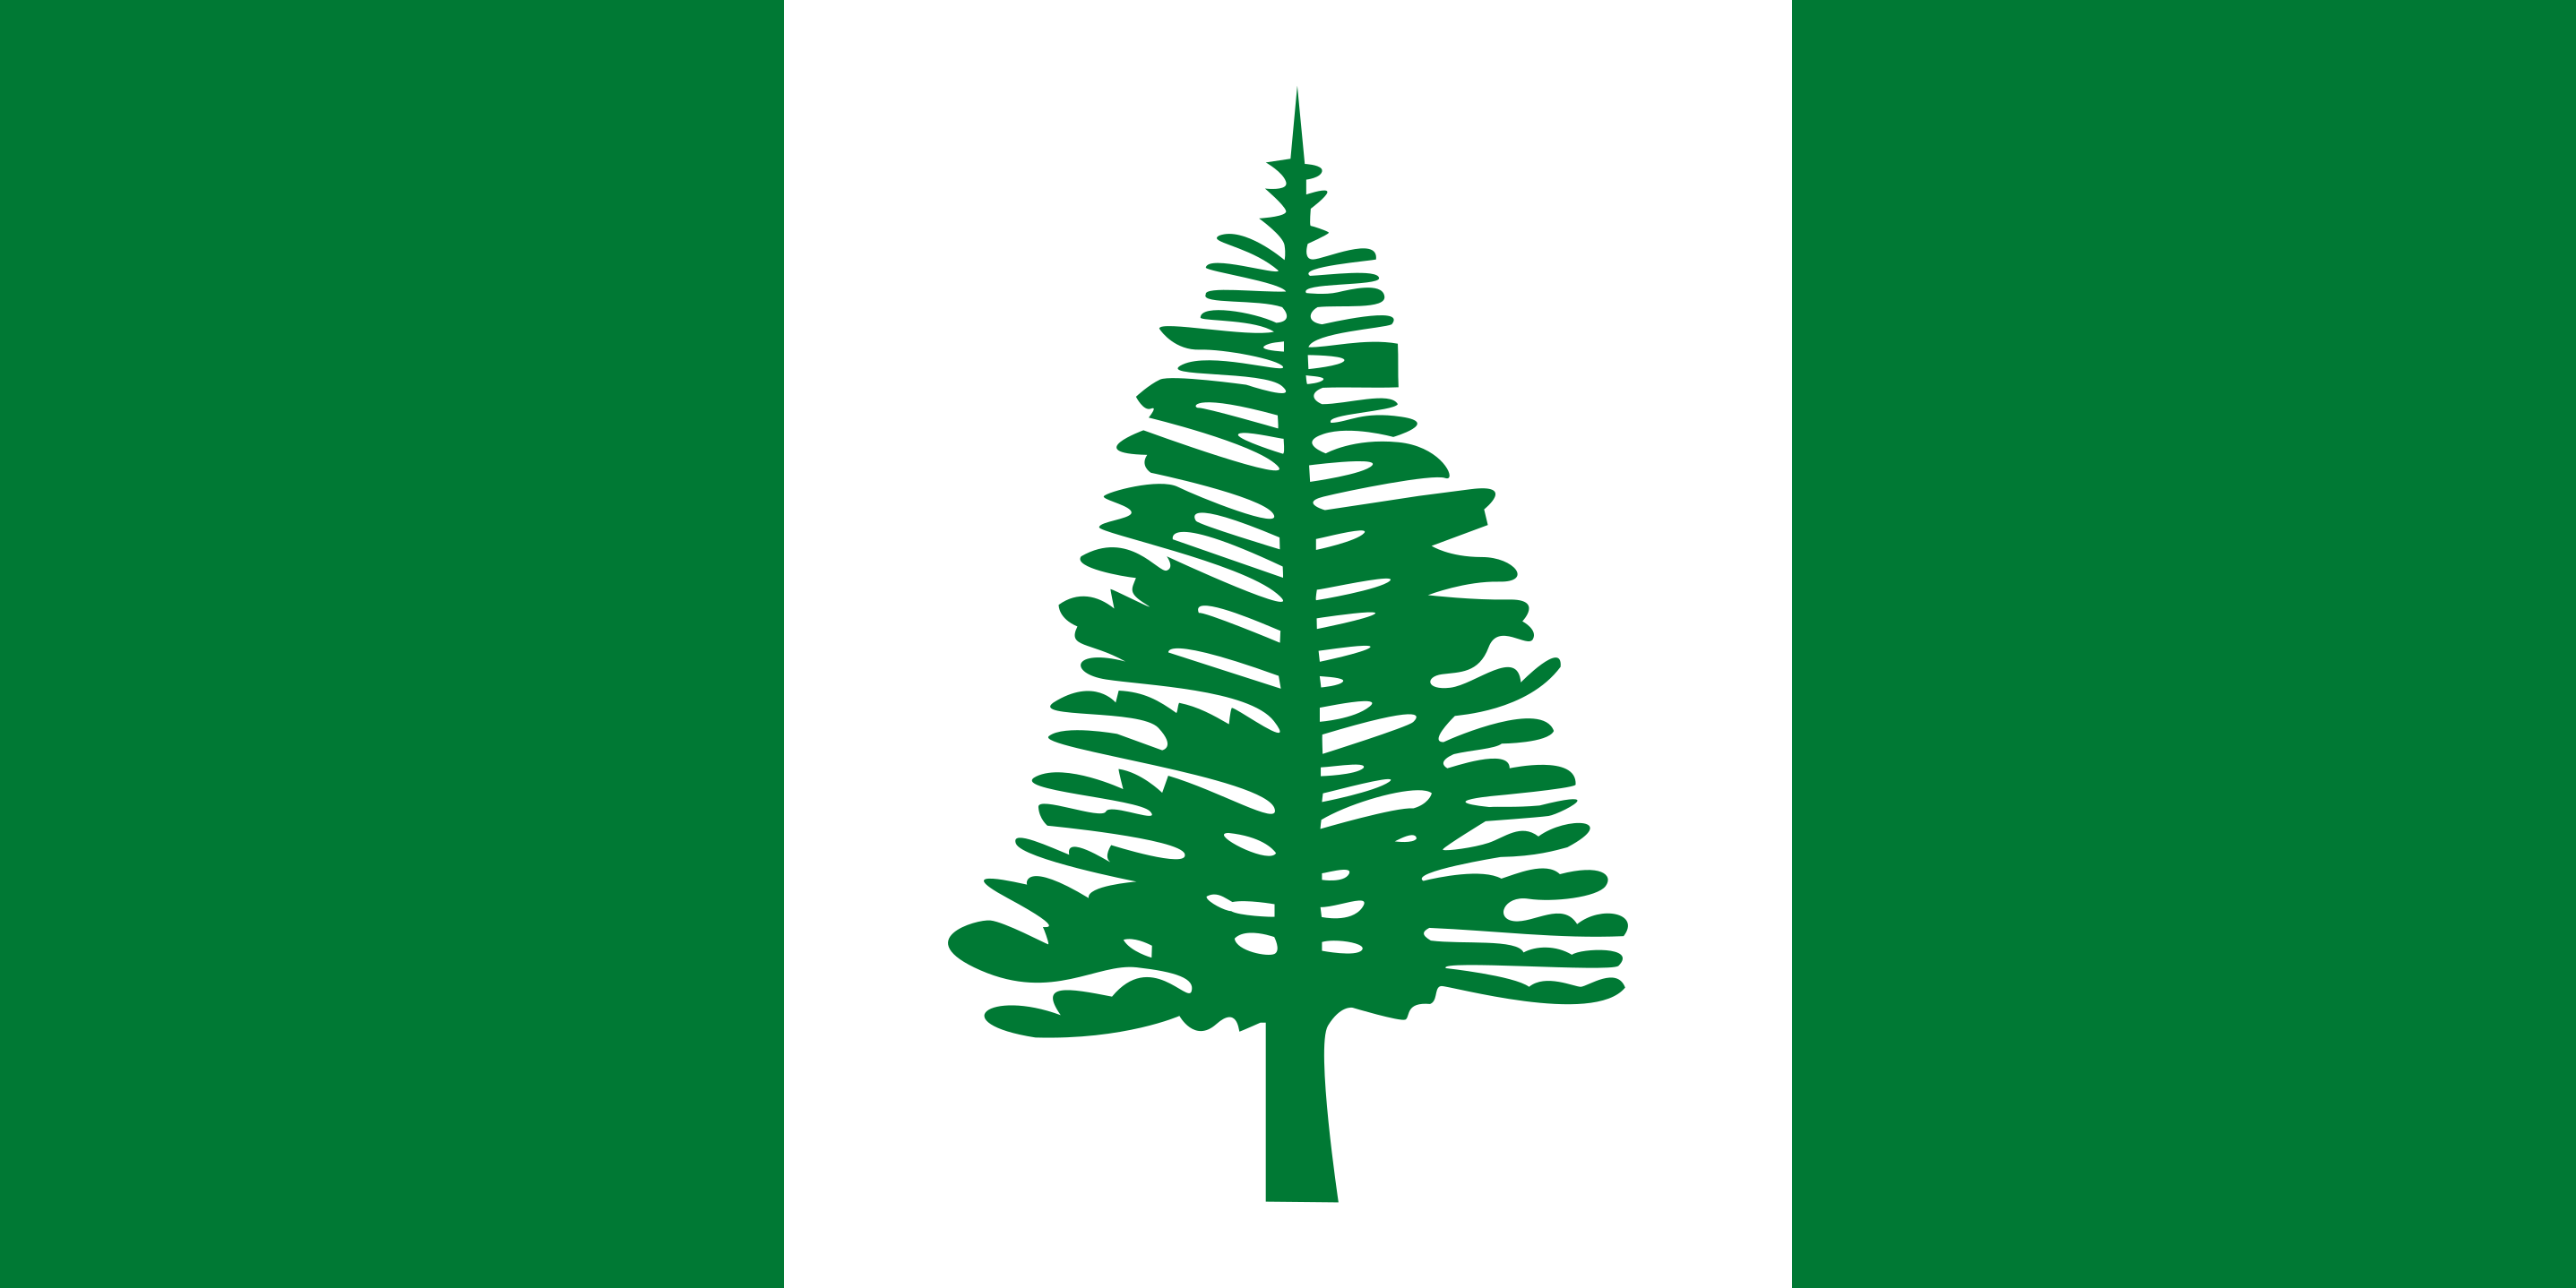 Norfolk Island Flag Image - Free Download